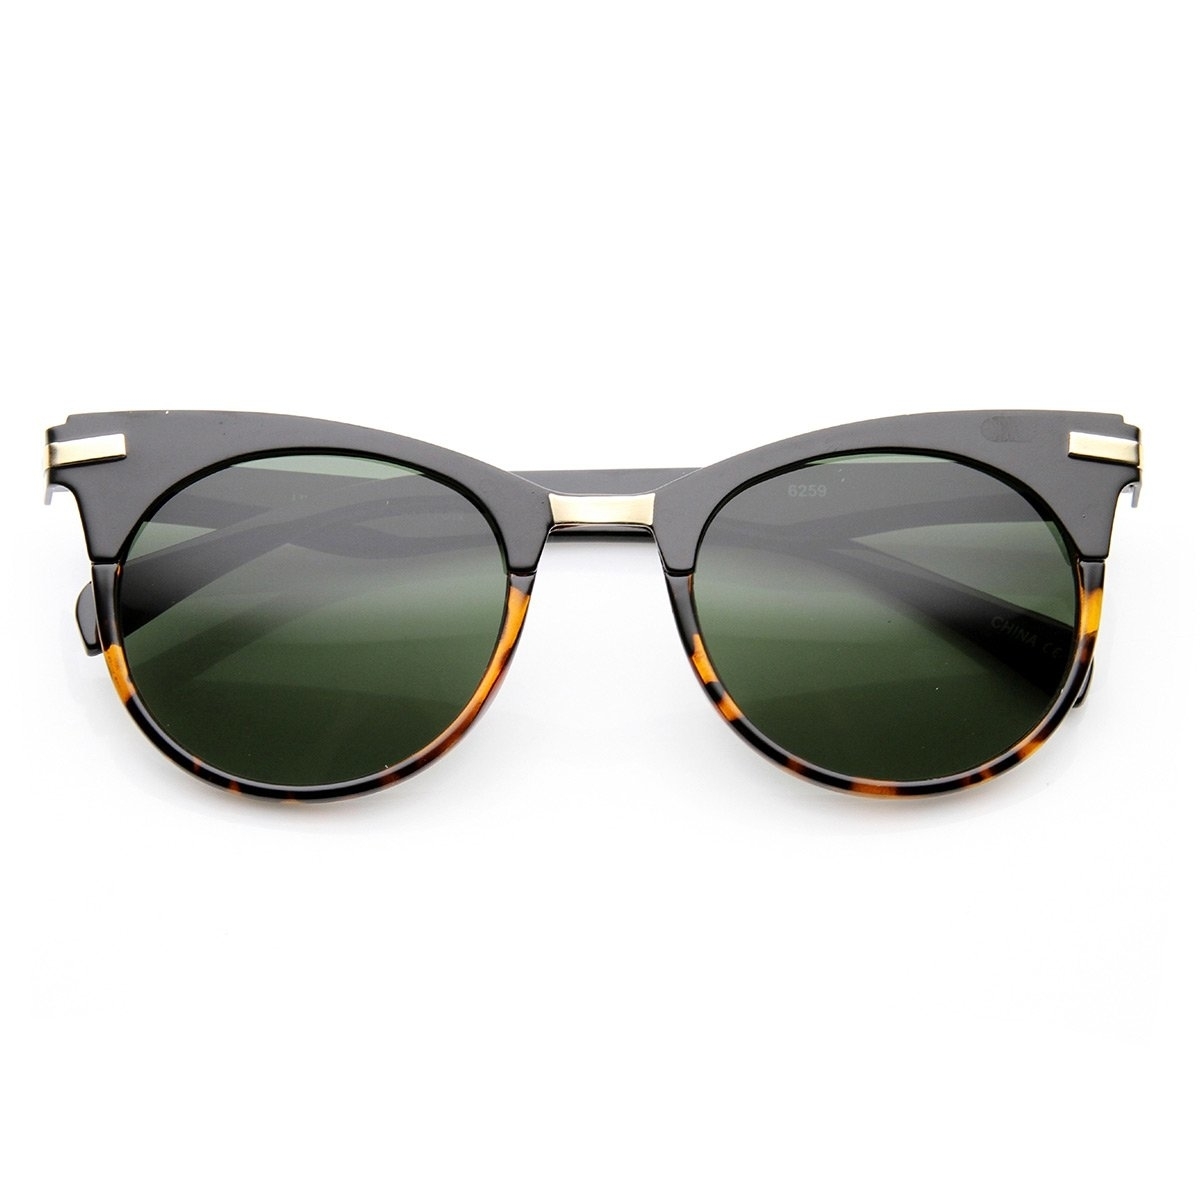 Retro Mod Fashion High Temple Riveted Round Cat Eye Sunglasses - Black-Clear Green